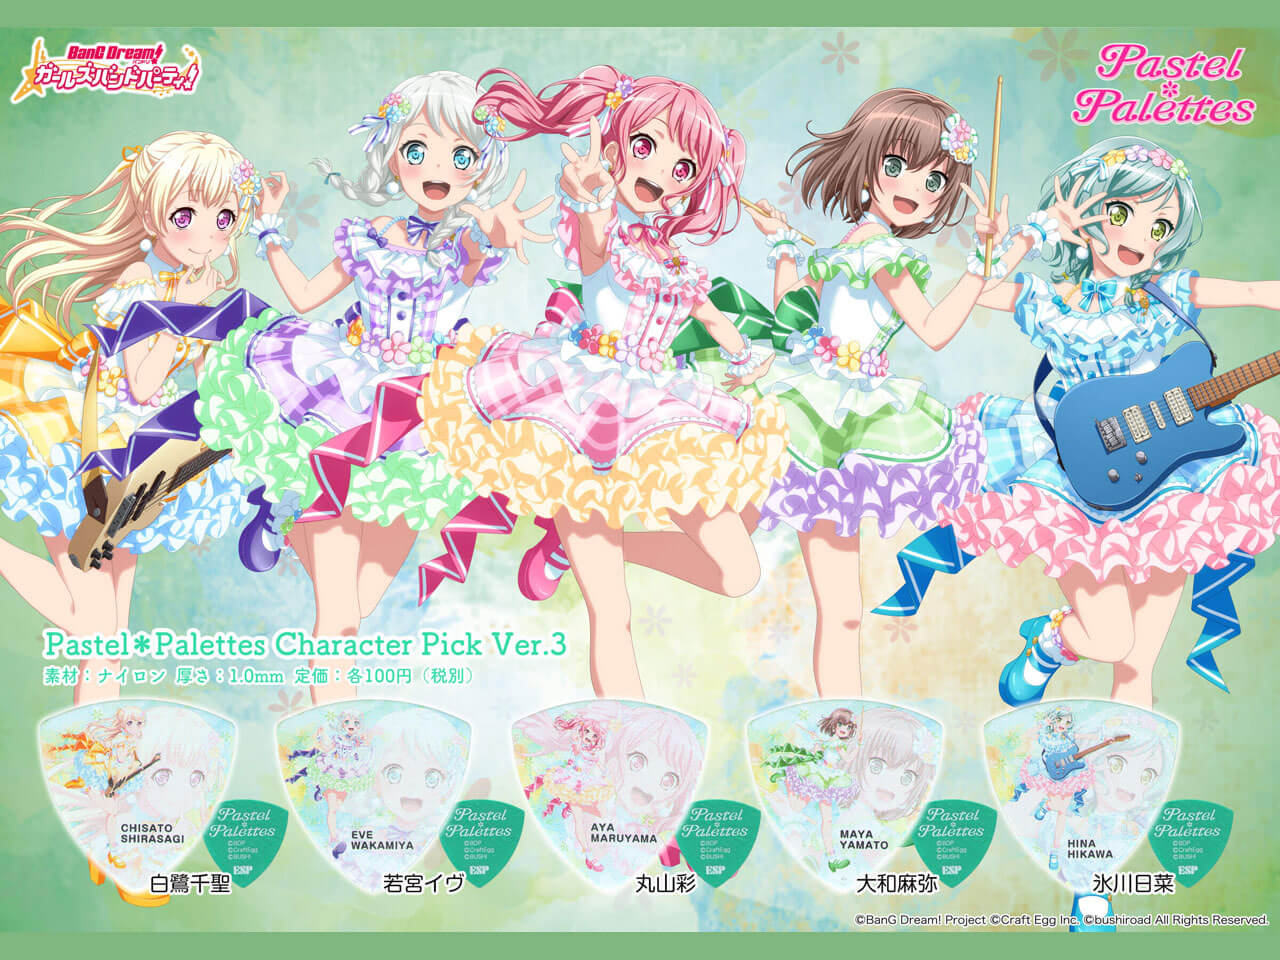 【ESP×BanG Dream!コラボピック】Pastel*Palettes Character Pick Ver.3 "大和麻弥"（GBP MAYA PASTEL PALETTES 3）＆”ハメパチ” セット